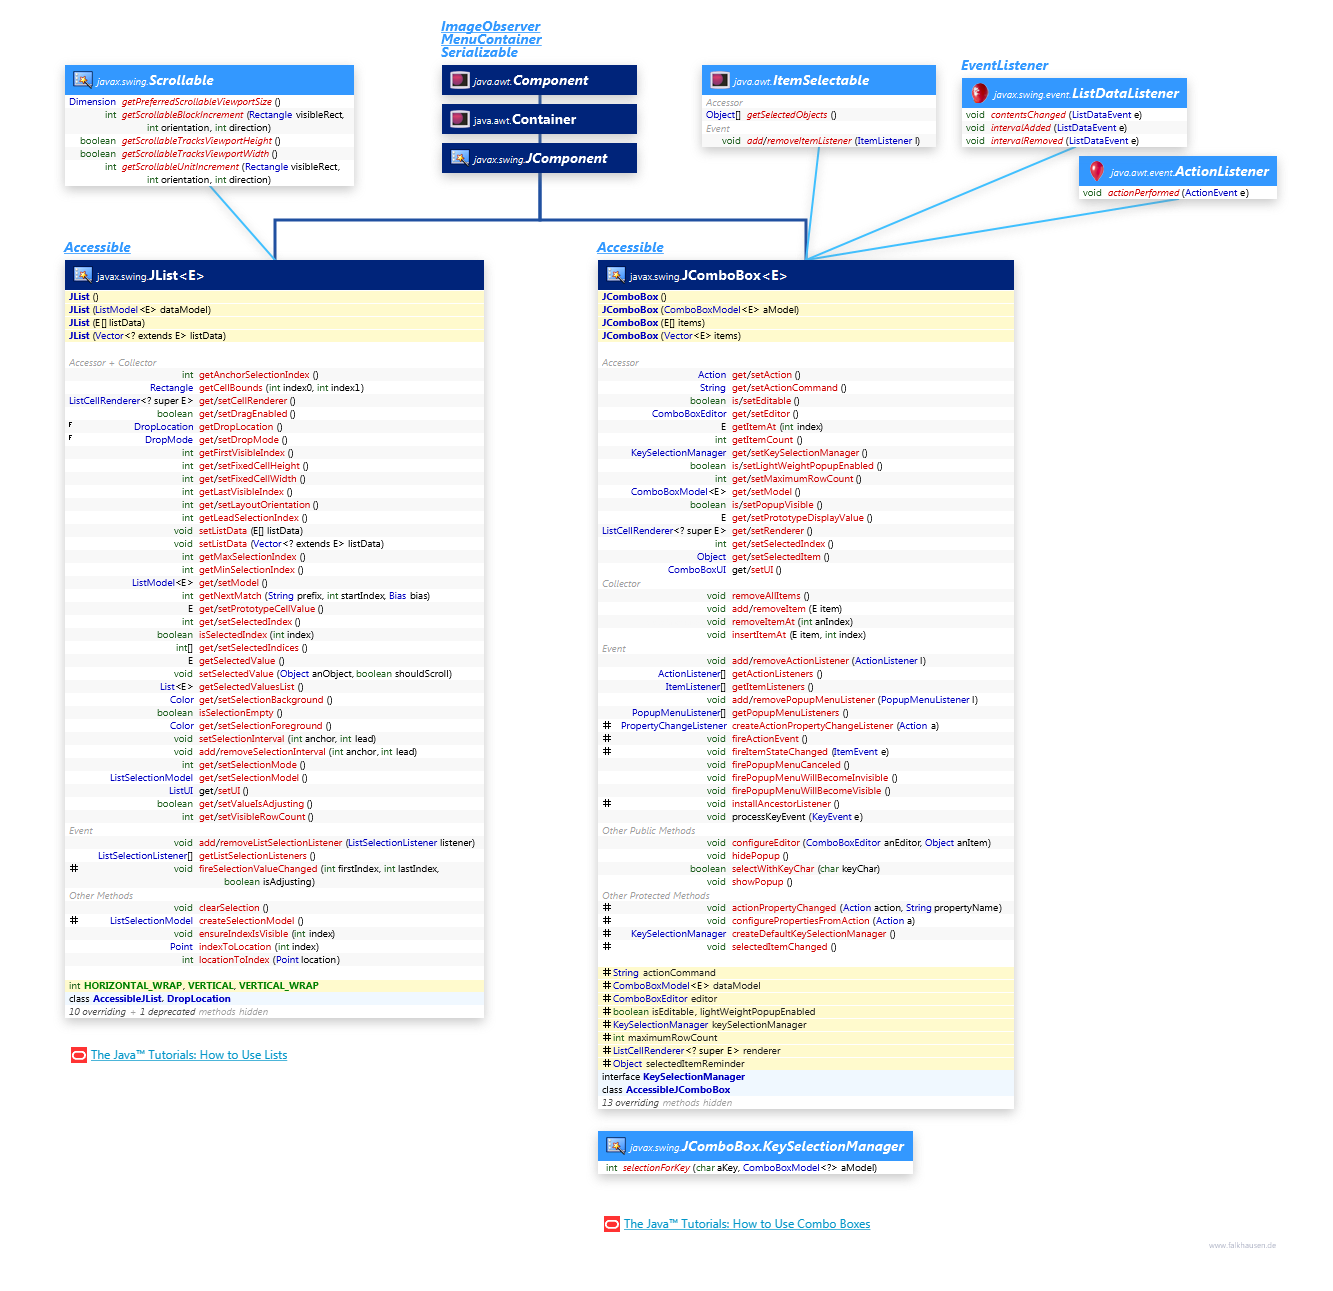 JList, JComboBox class diagram and api documentation for Java 10